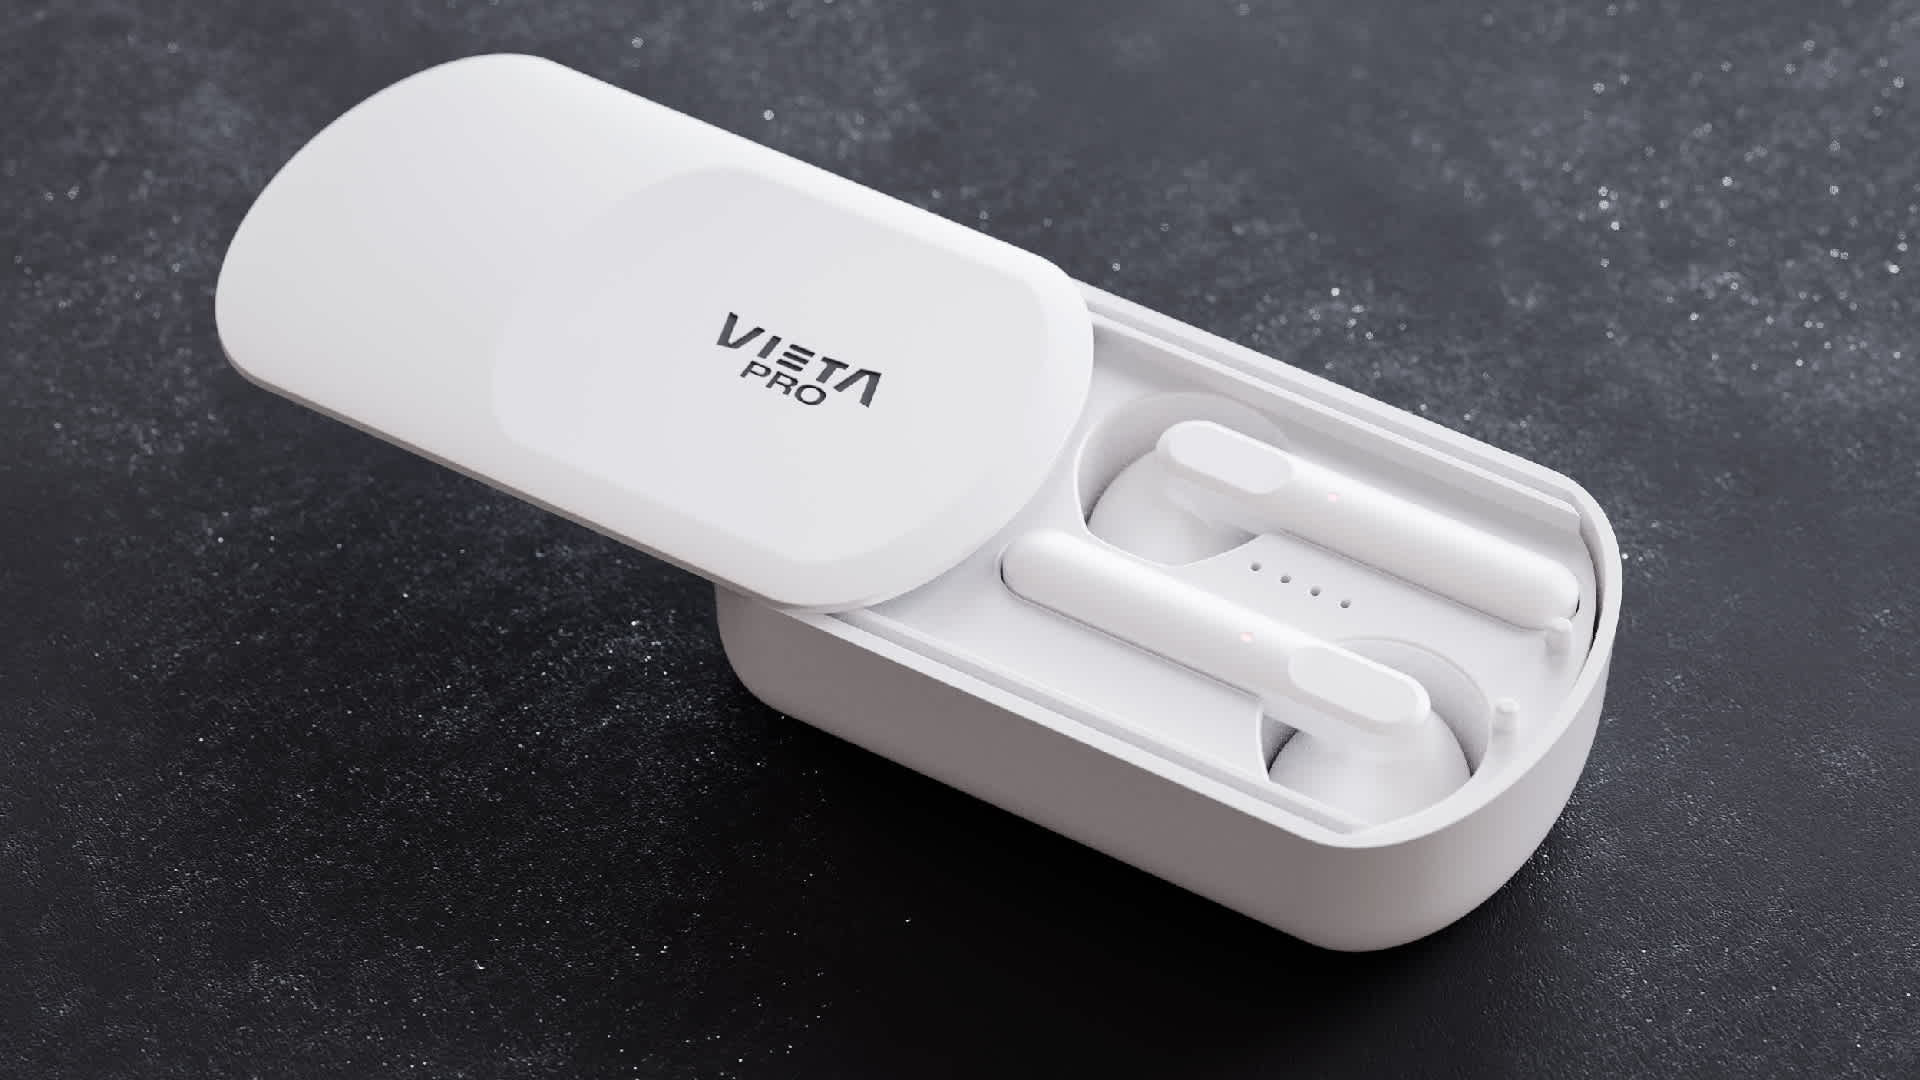 Wireless Earbuds for Vieta designed by ANIMA